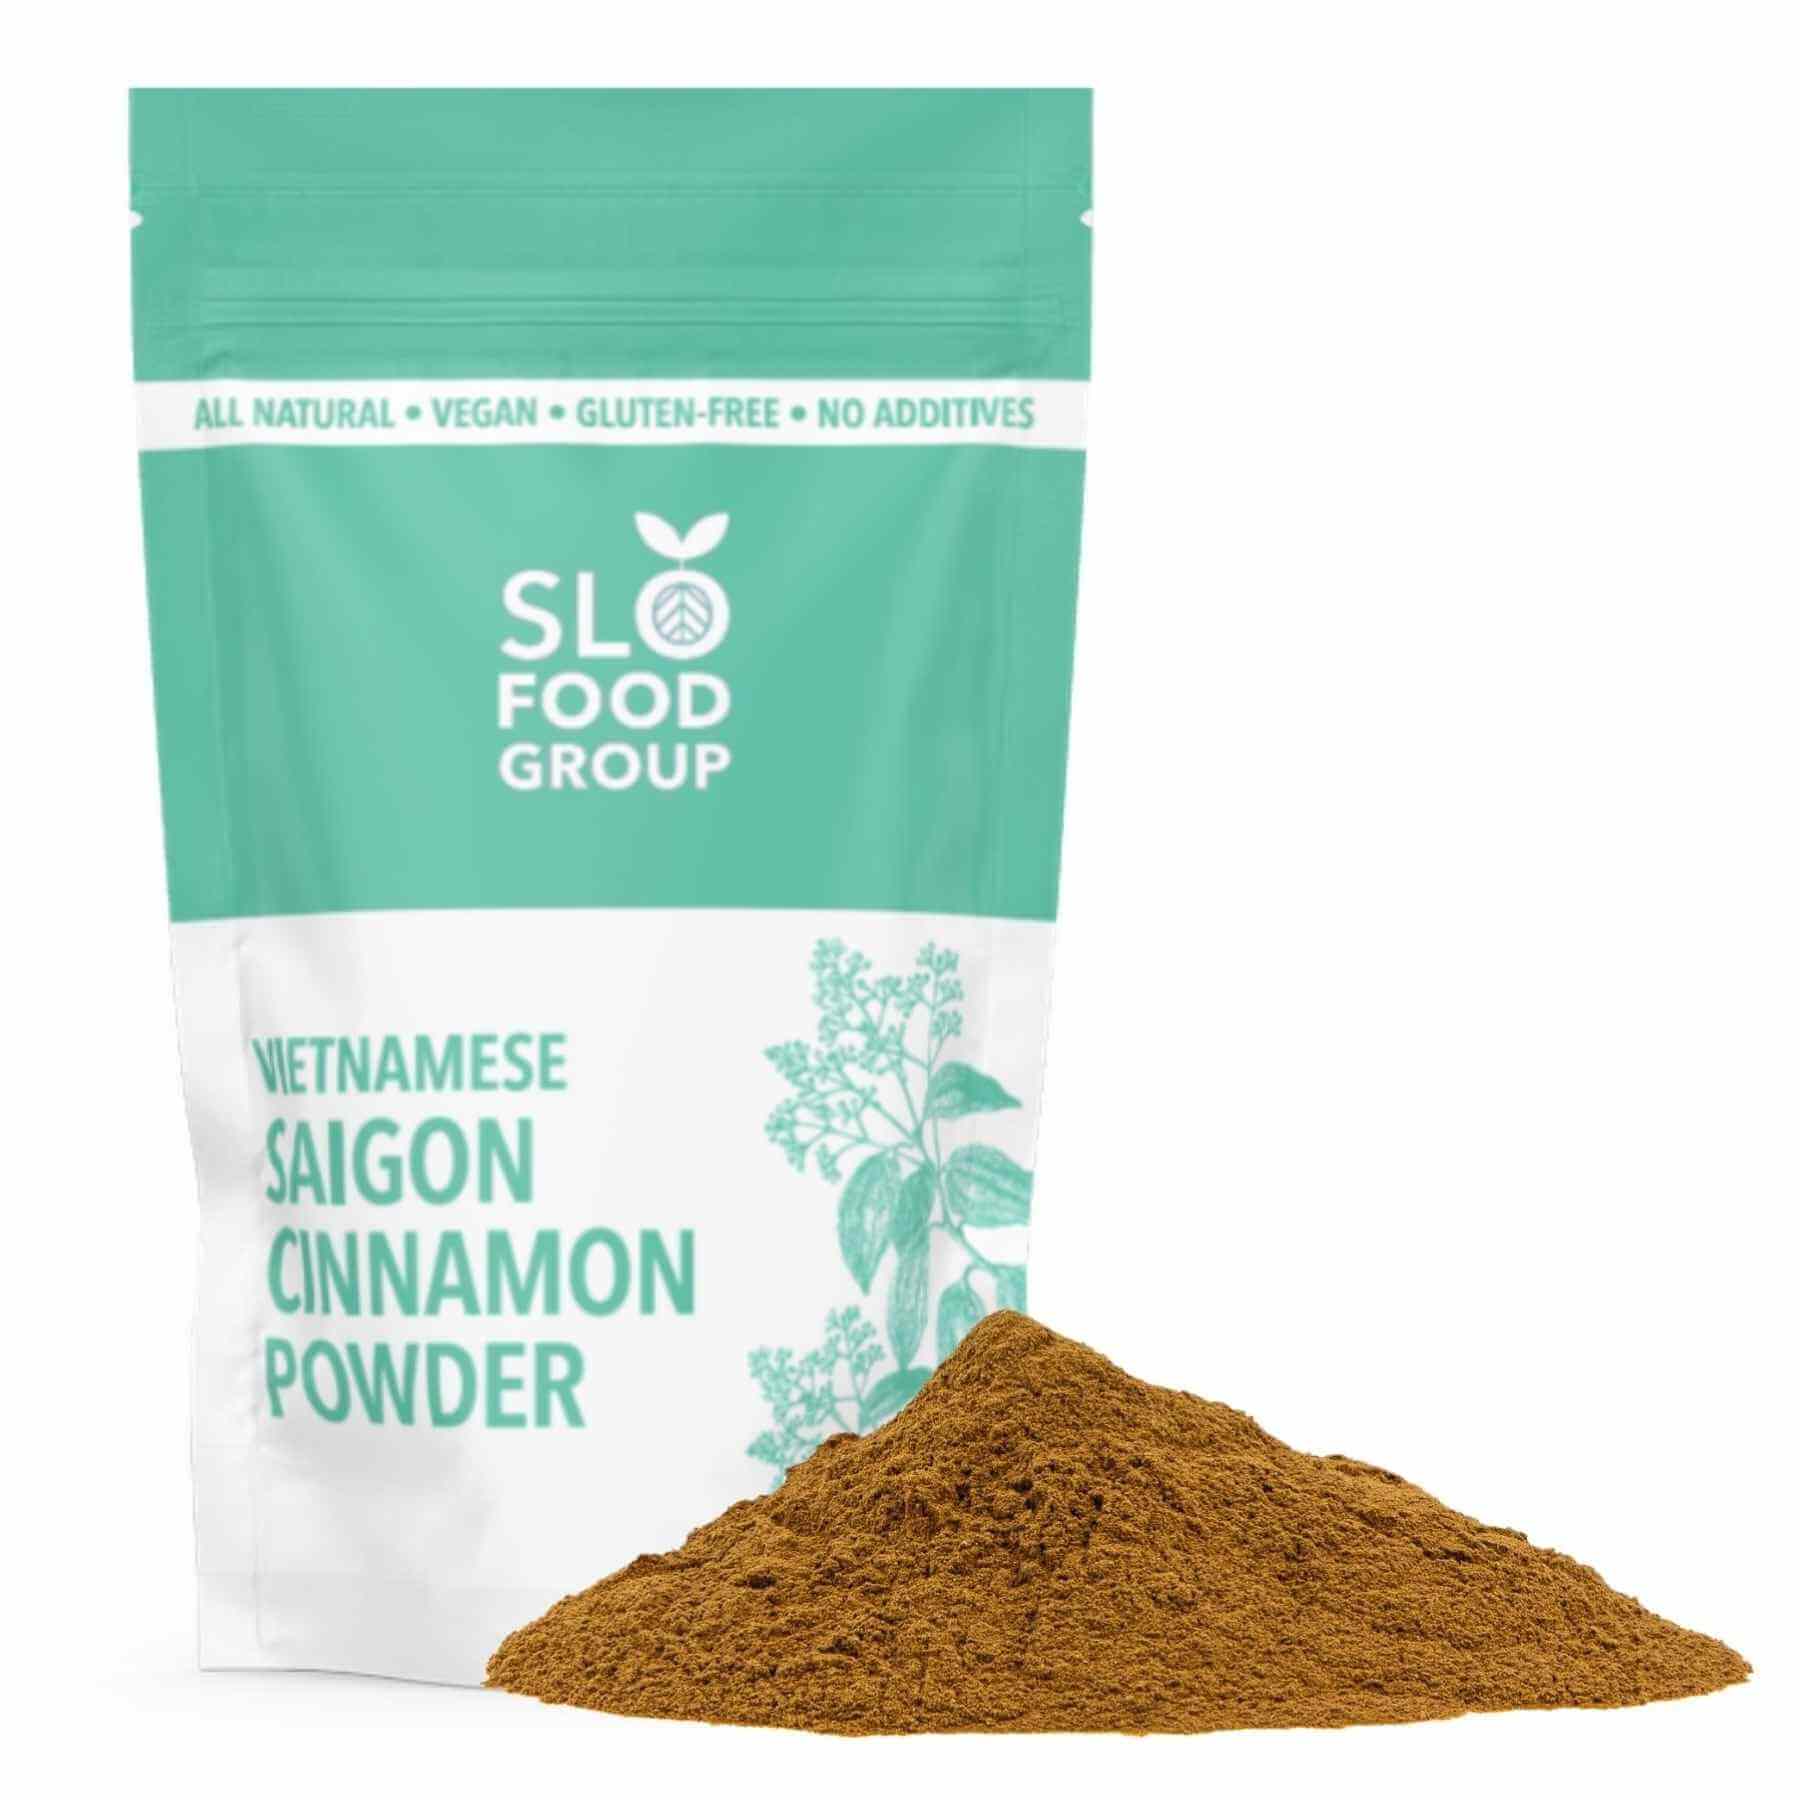 Saigon Cinnamon Powder, Vietnam spices Slofoodgroup 